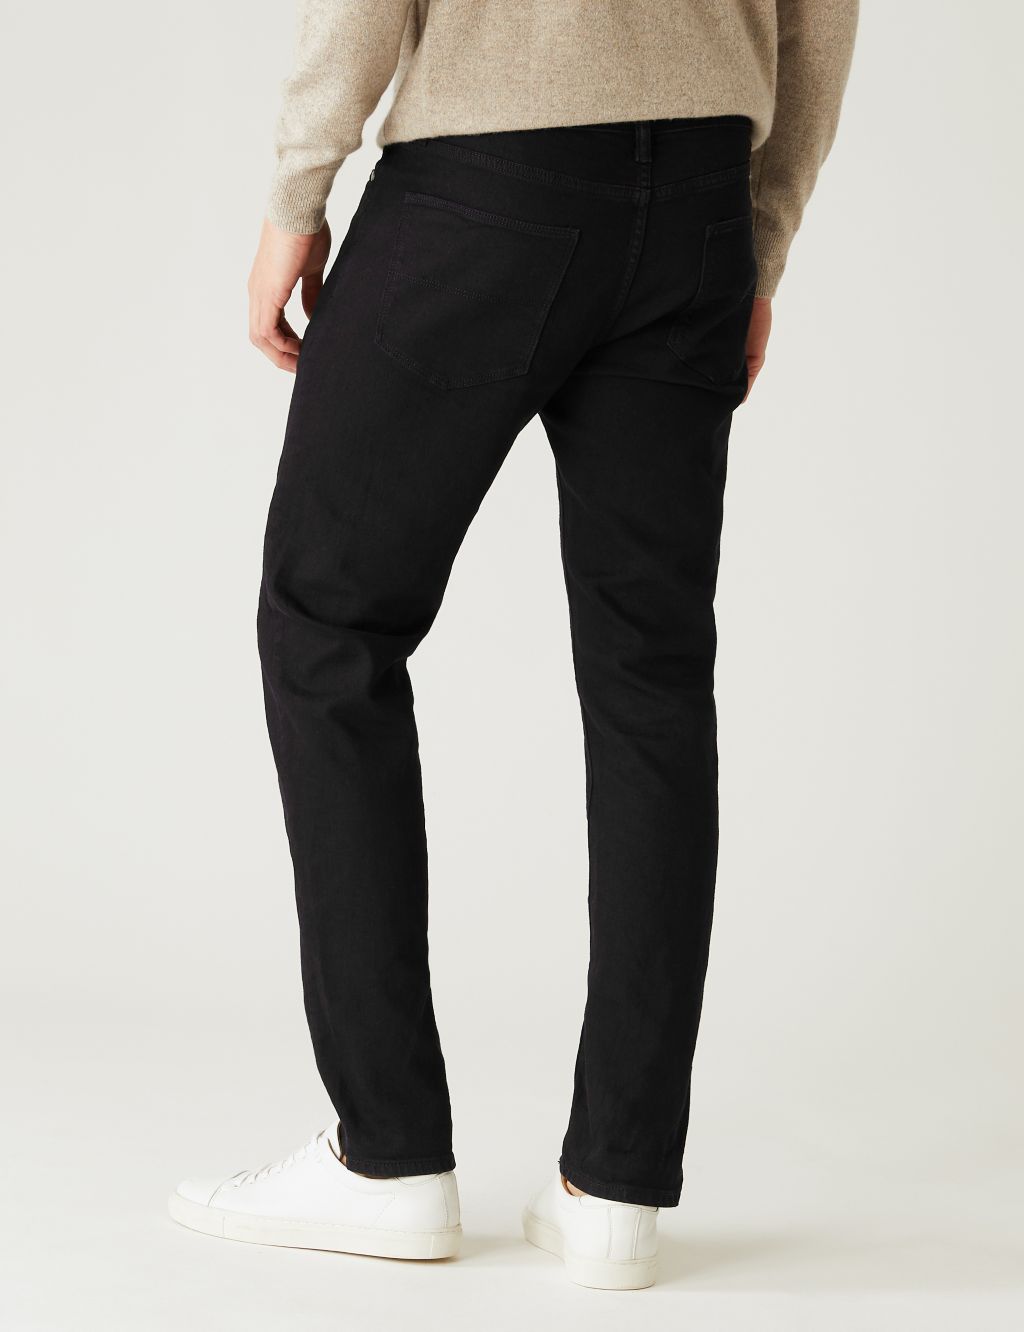 Shorter Length Slim Fit Stretch Jeans image 4